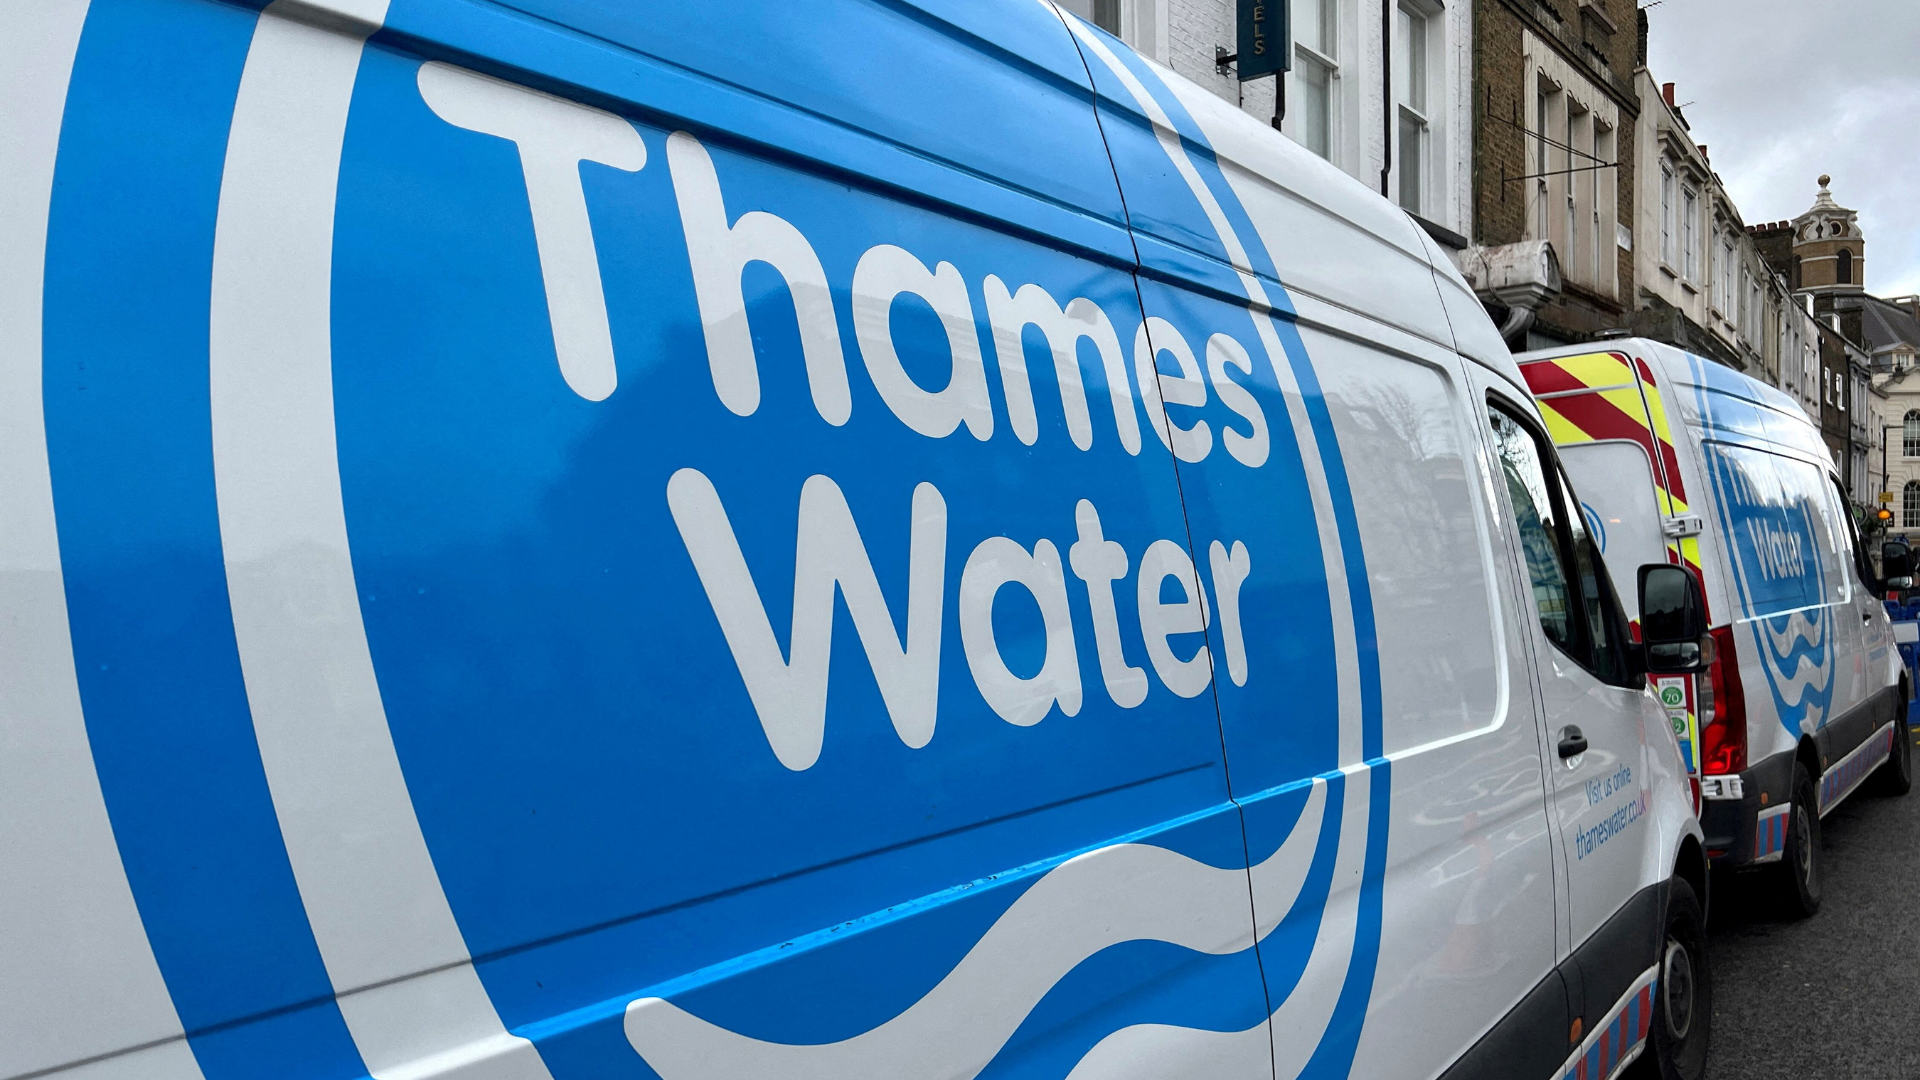 Thames Water £1.1 billion plan for environmental improvements